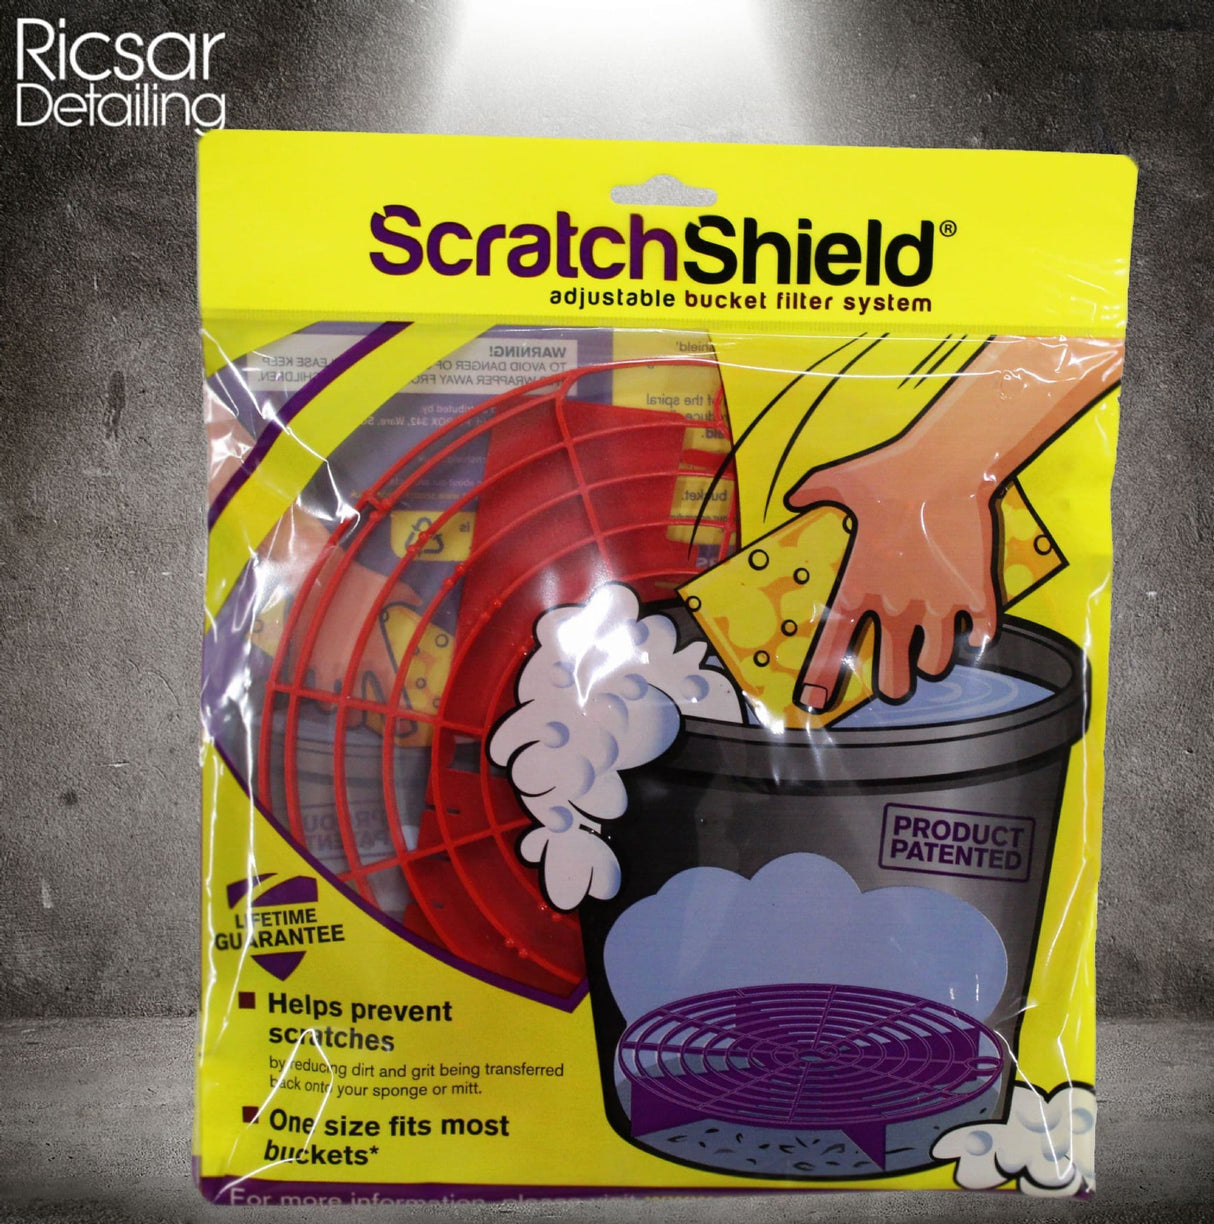 Scratch Shield bucket filter system